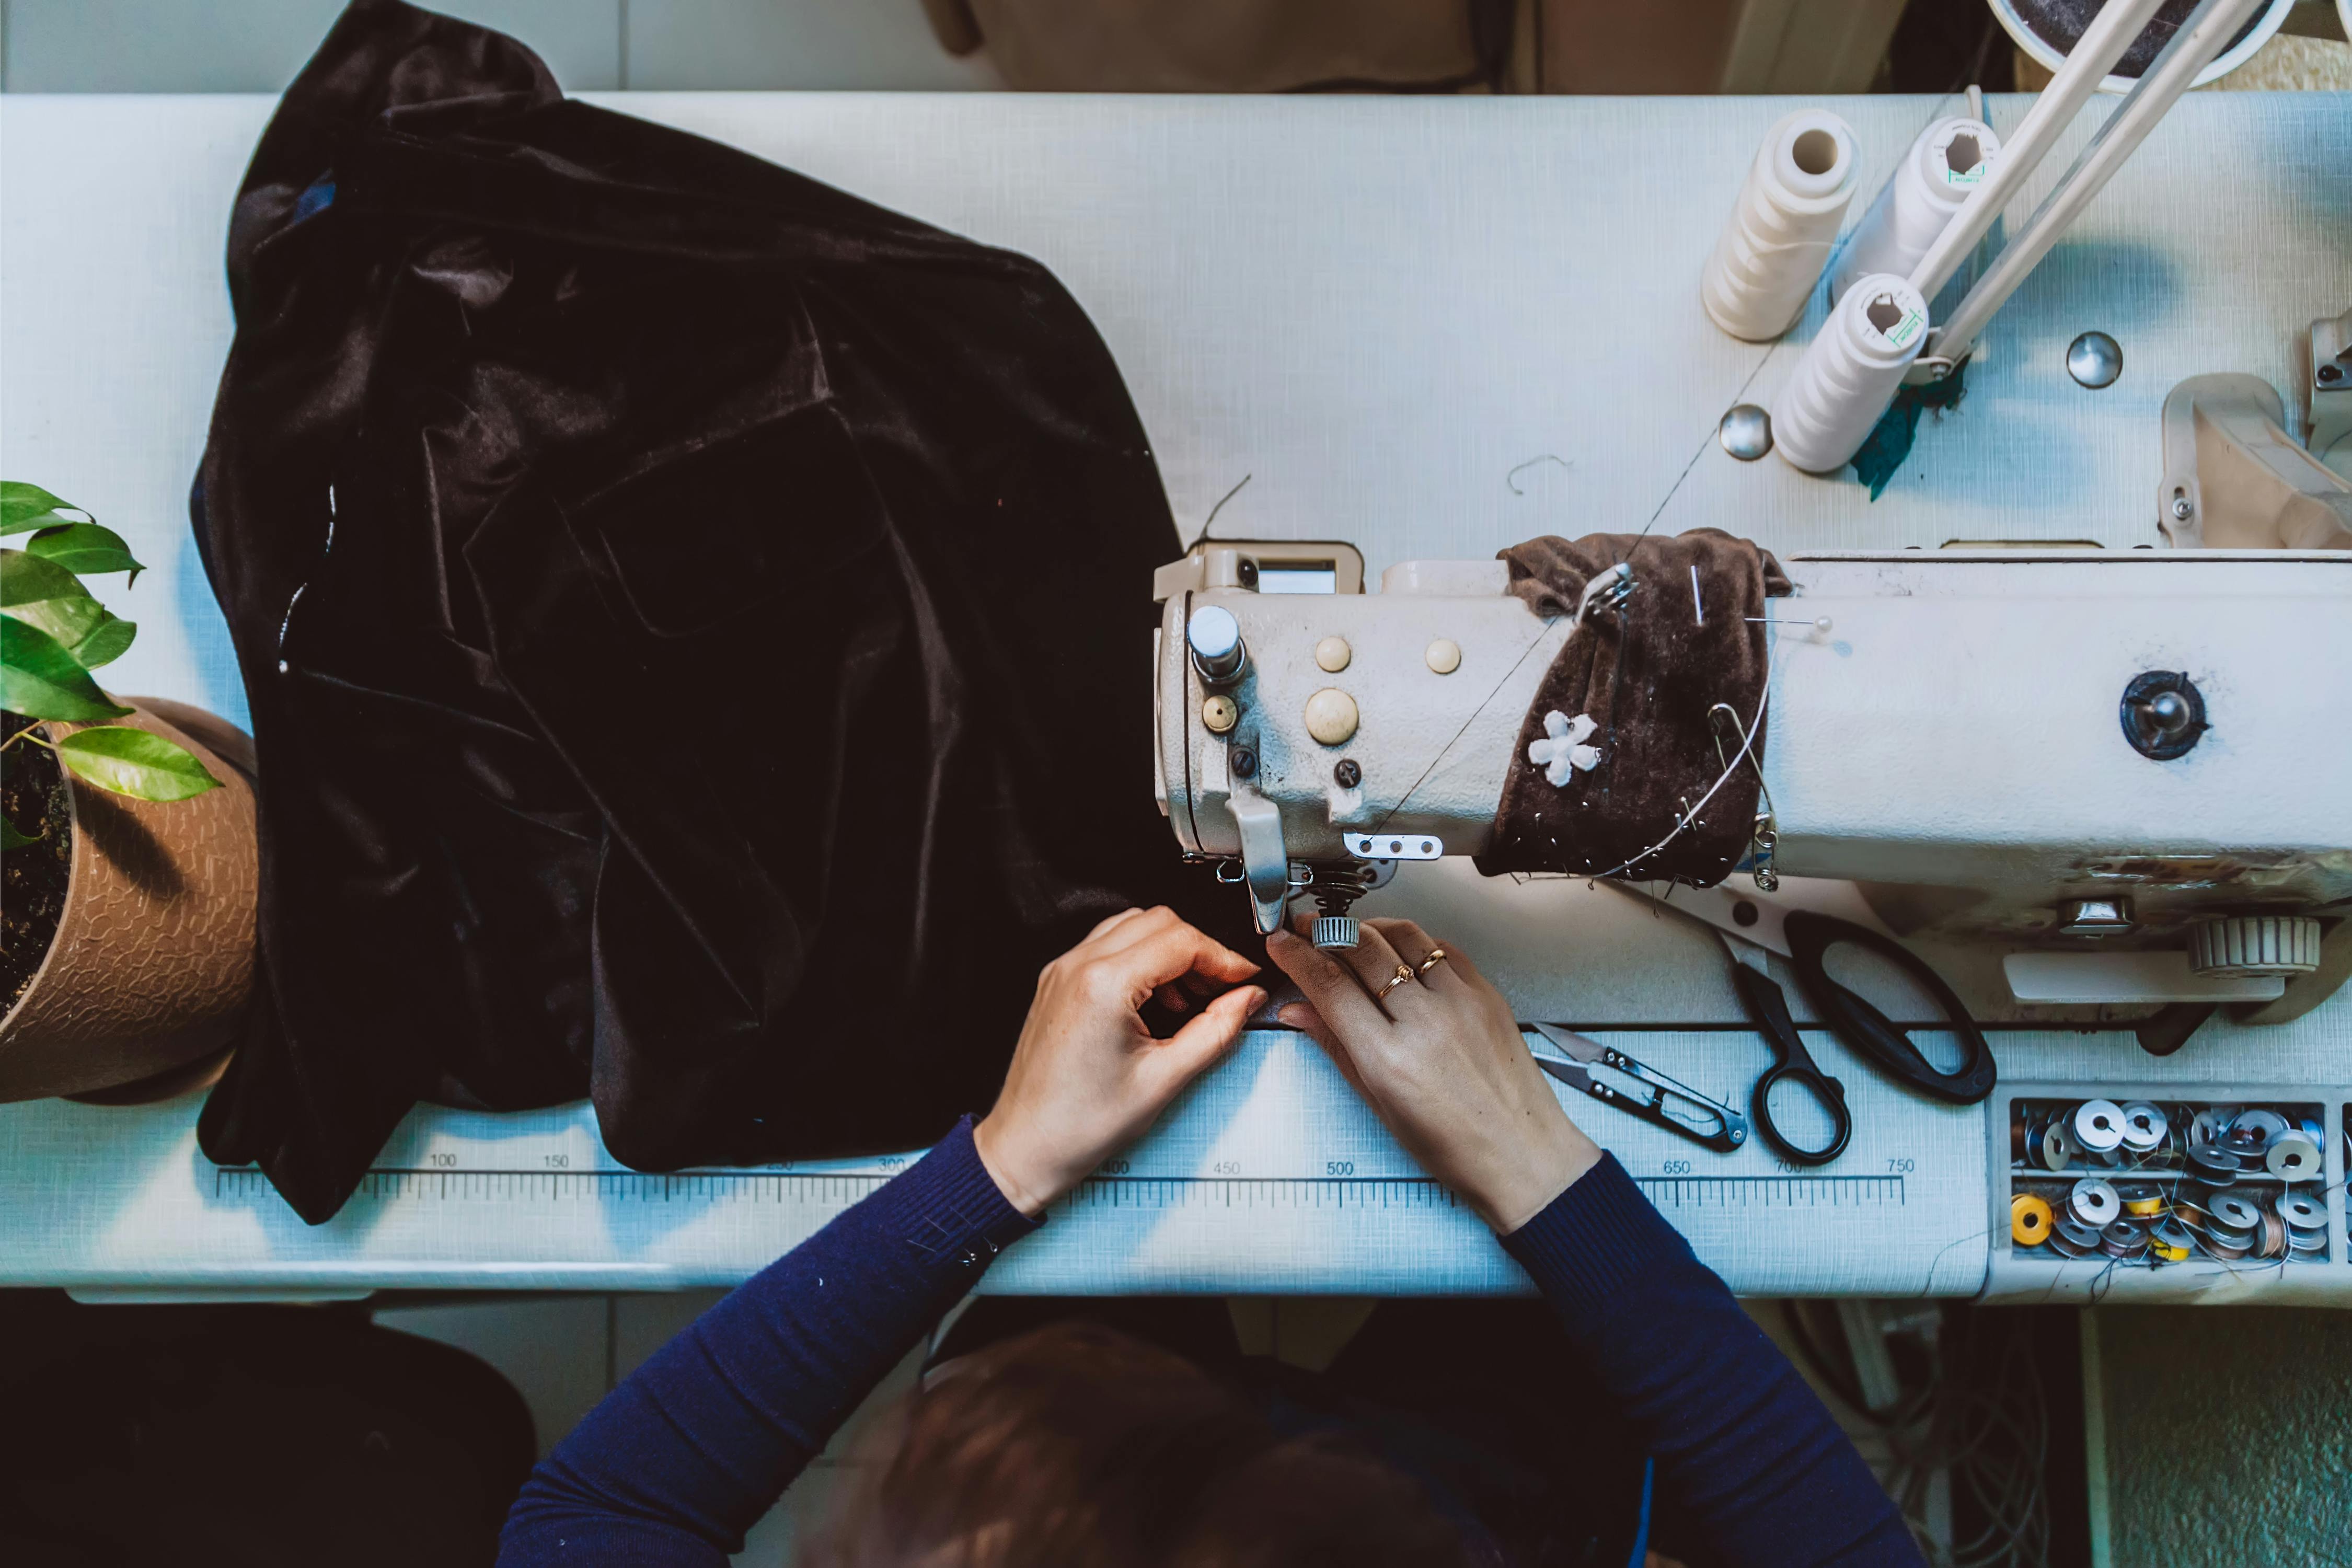  birds eye photo of woman sewing velvet jacket on sewing maching